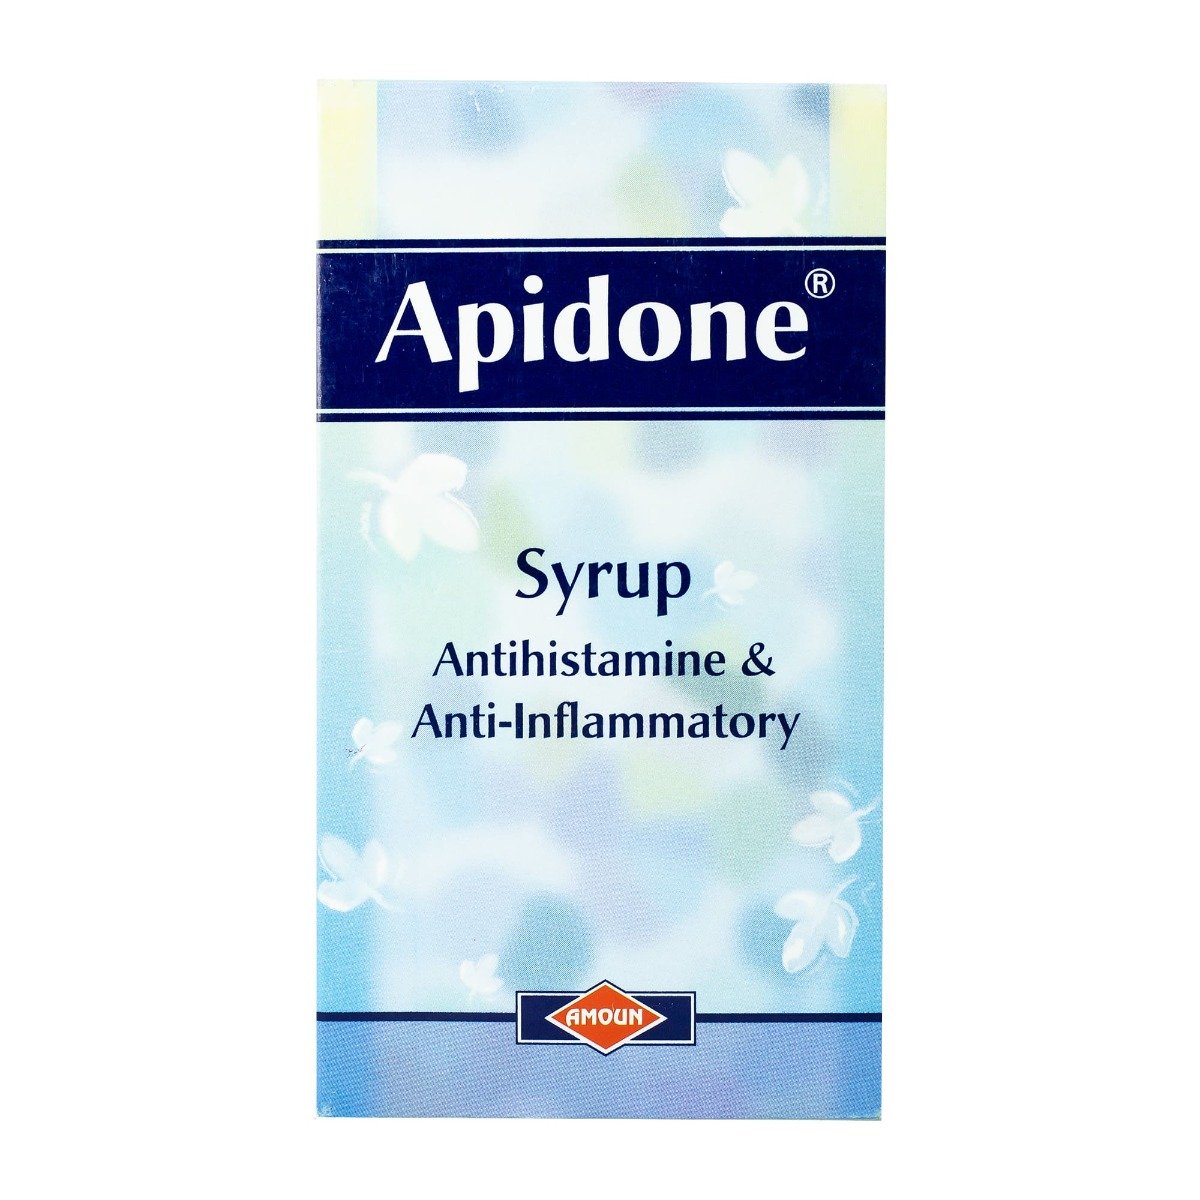 Apidone Syrup - 125 ml - Bloom Pharmacy